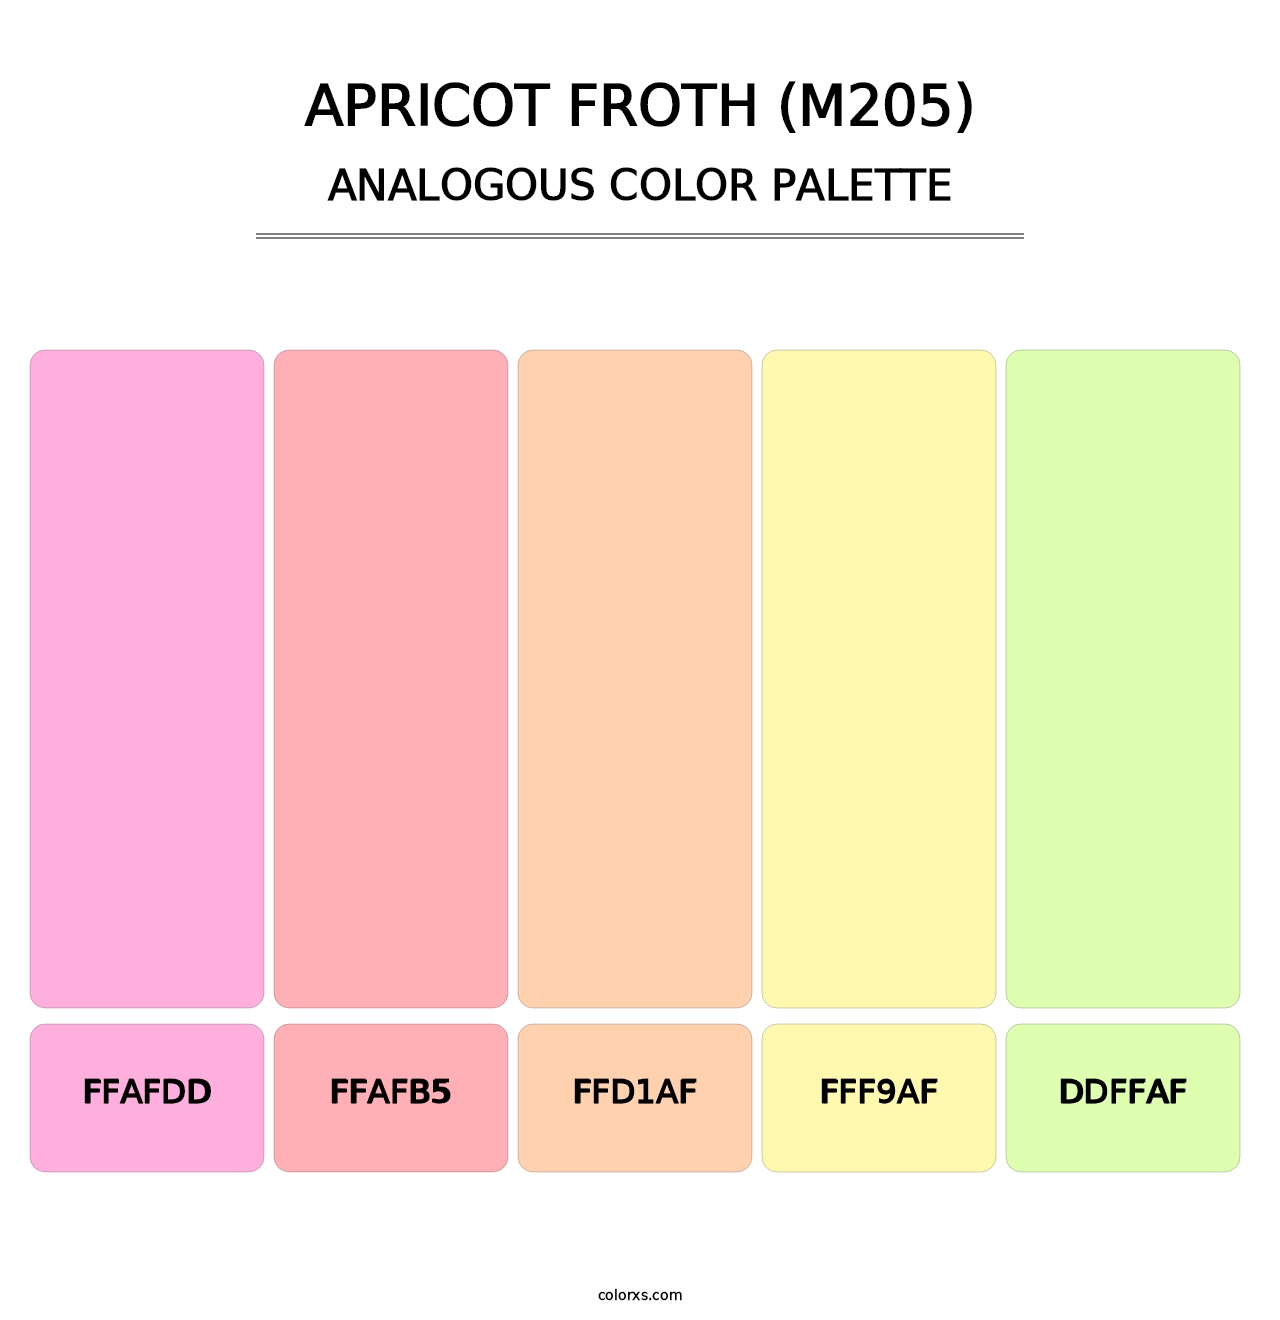 Apricot Froth (M205) - Analogous Color Palette